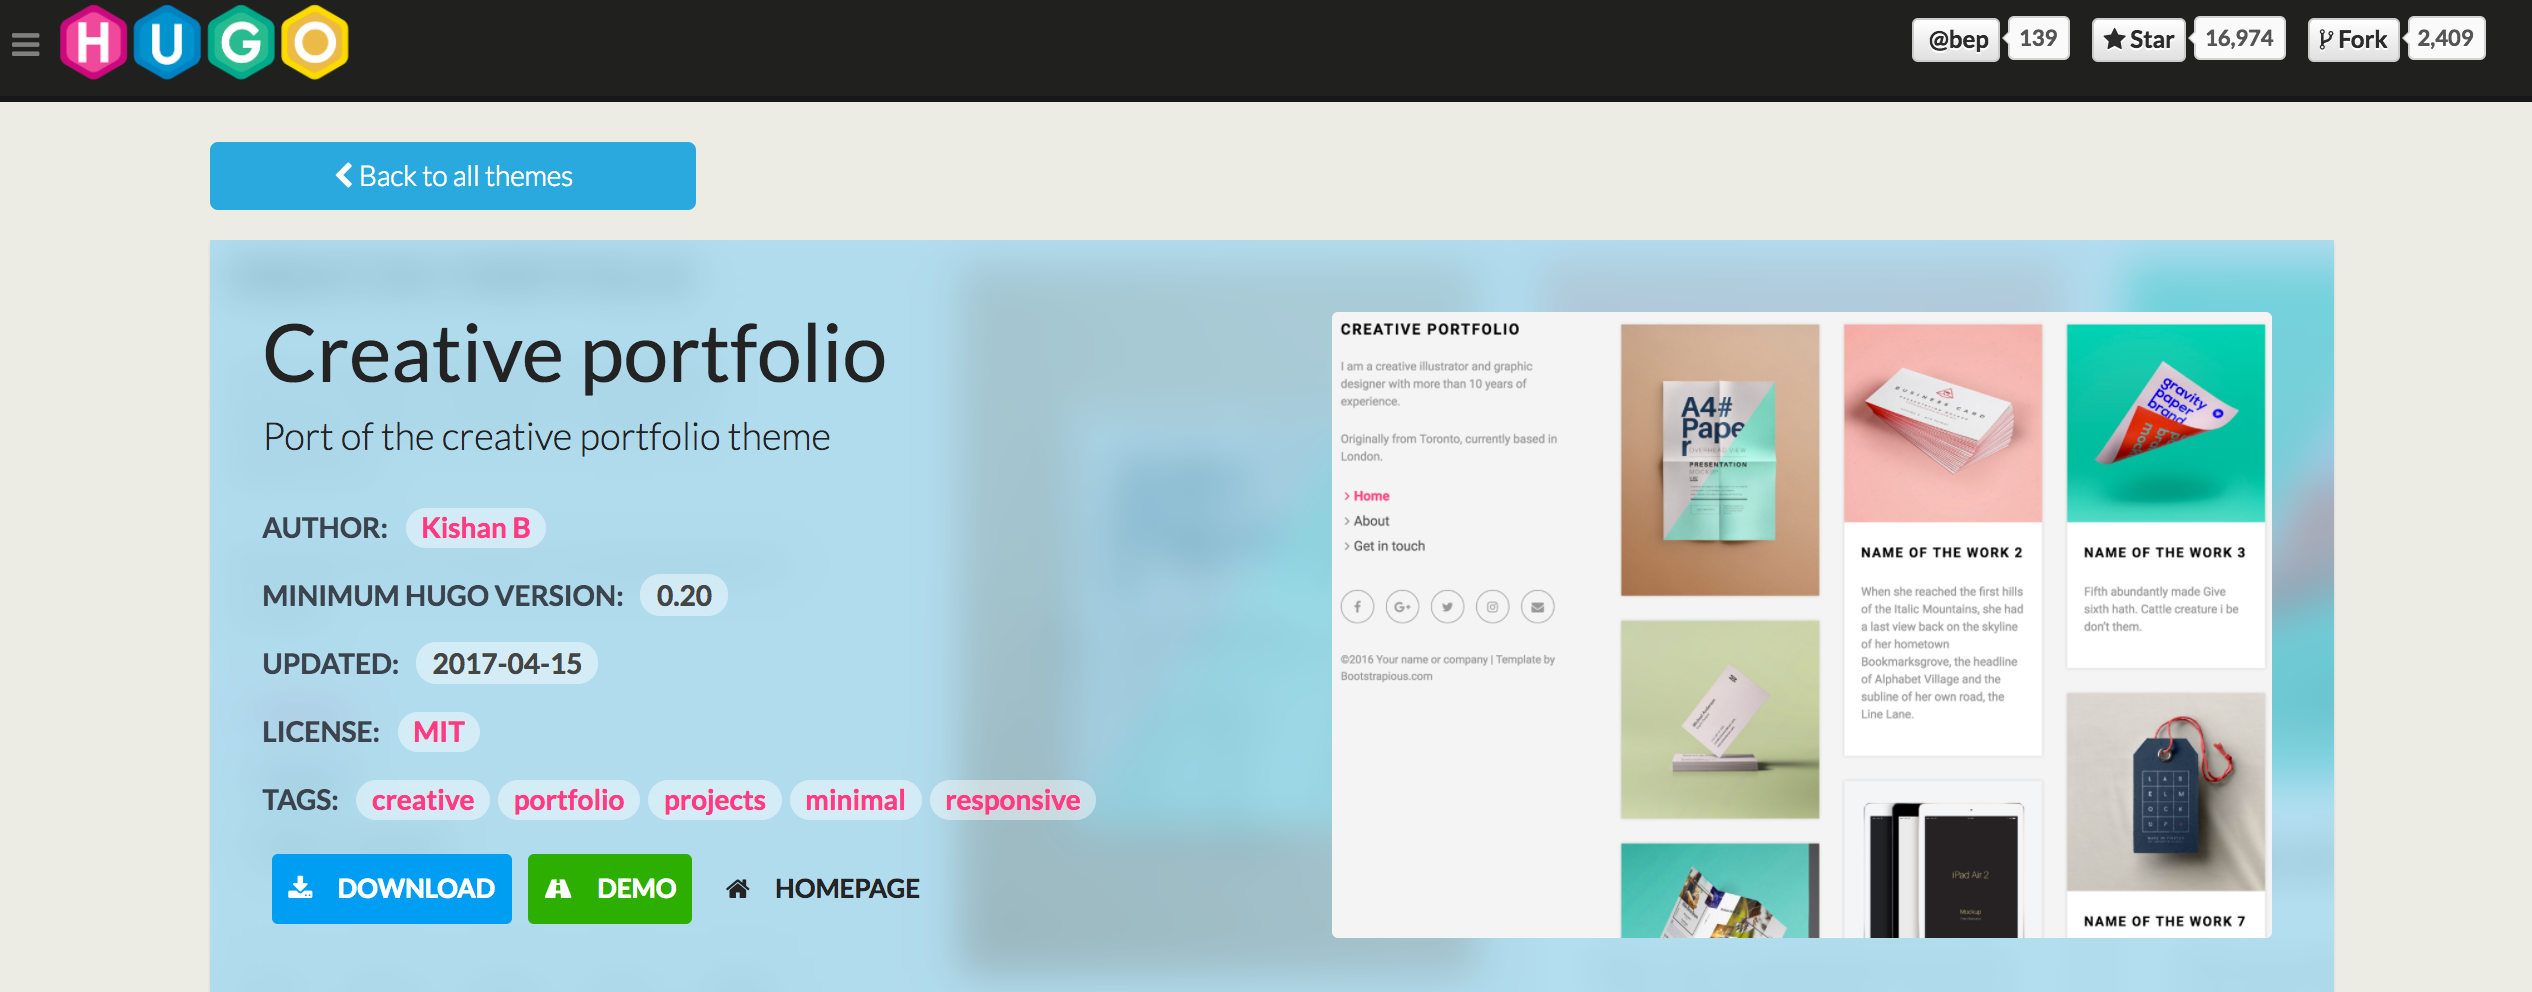 a screenshot of the hugo creative portfolio theme page on hugo's website